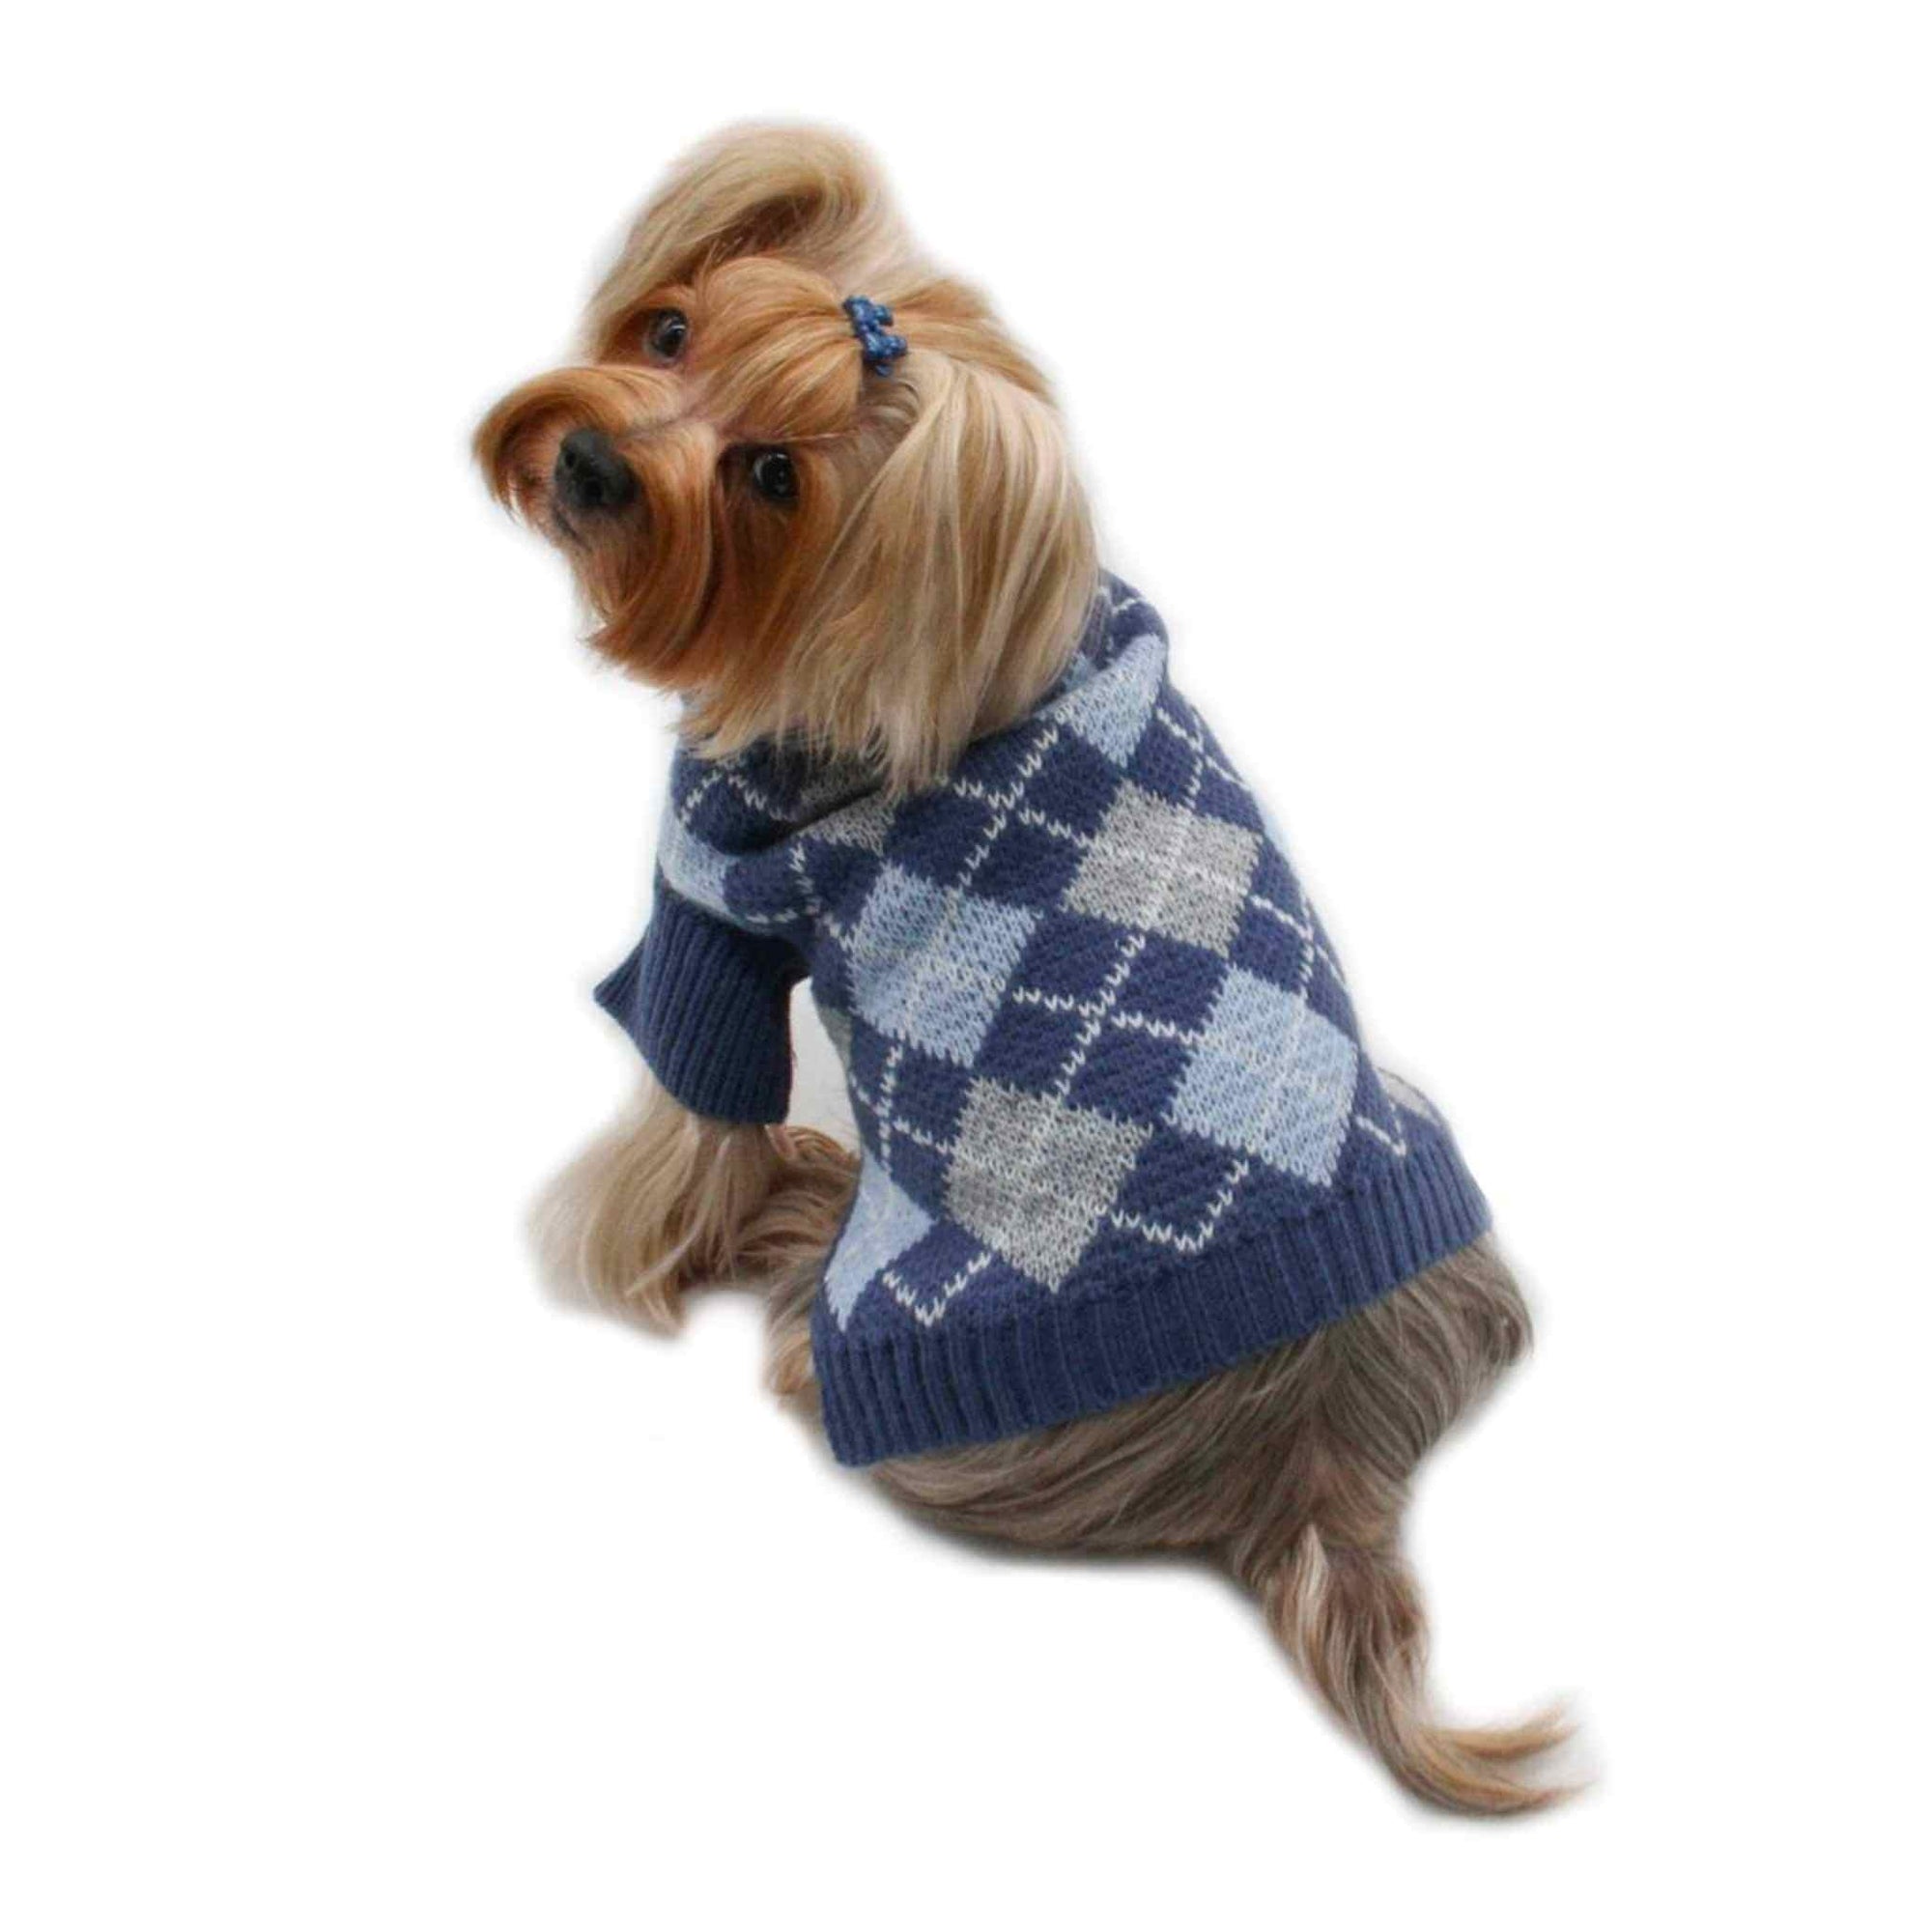 Klippo Navy/Grey Argyle Turtleneck Dog Sweater on a Yorkie